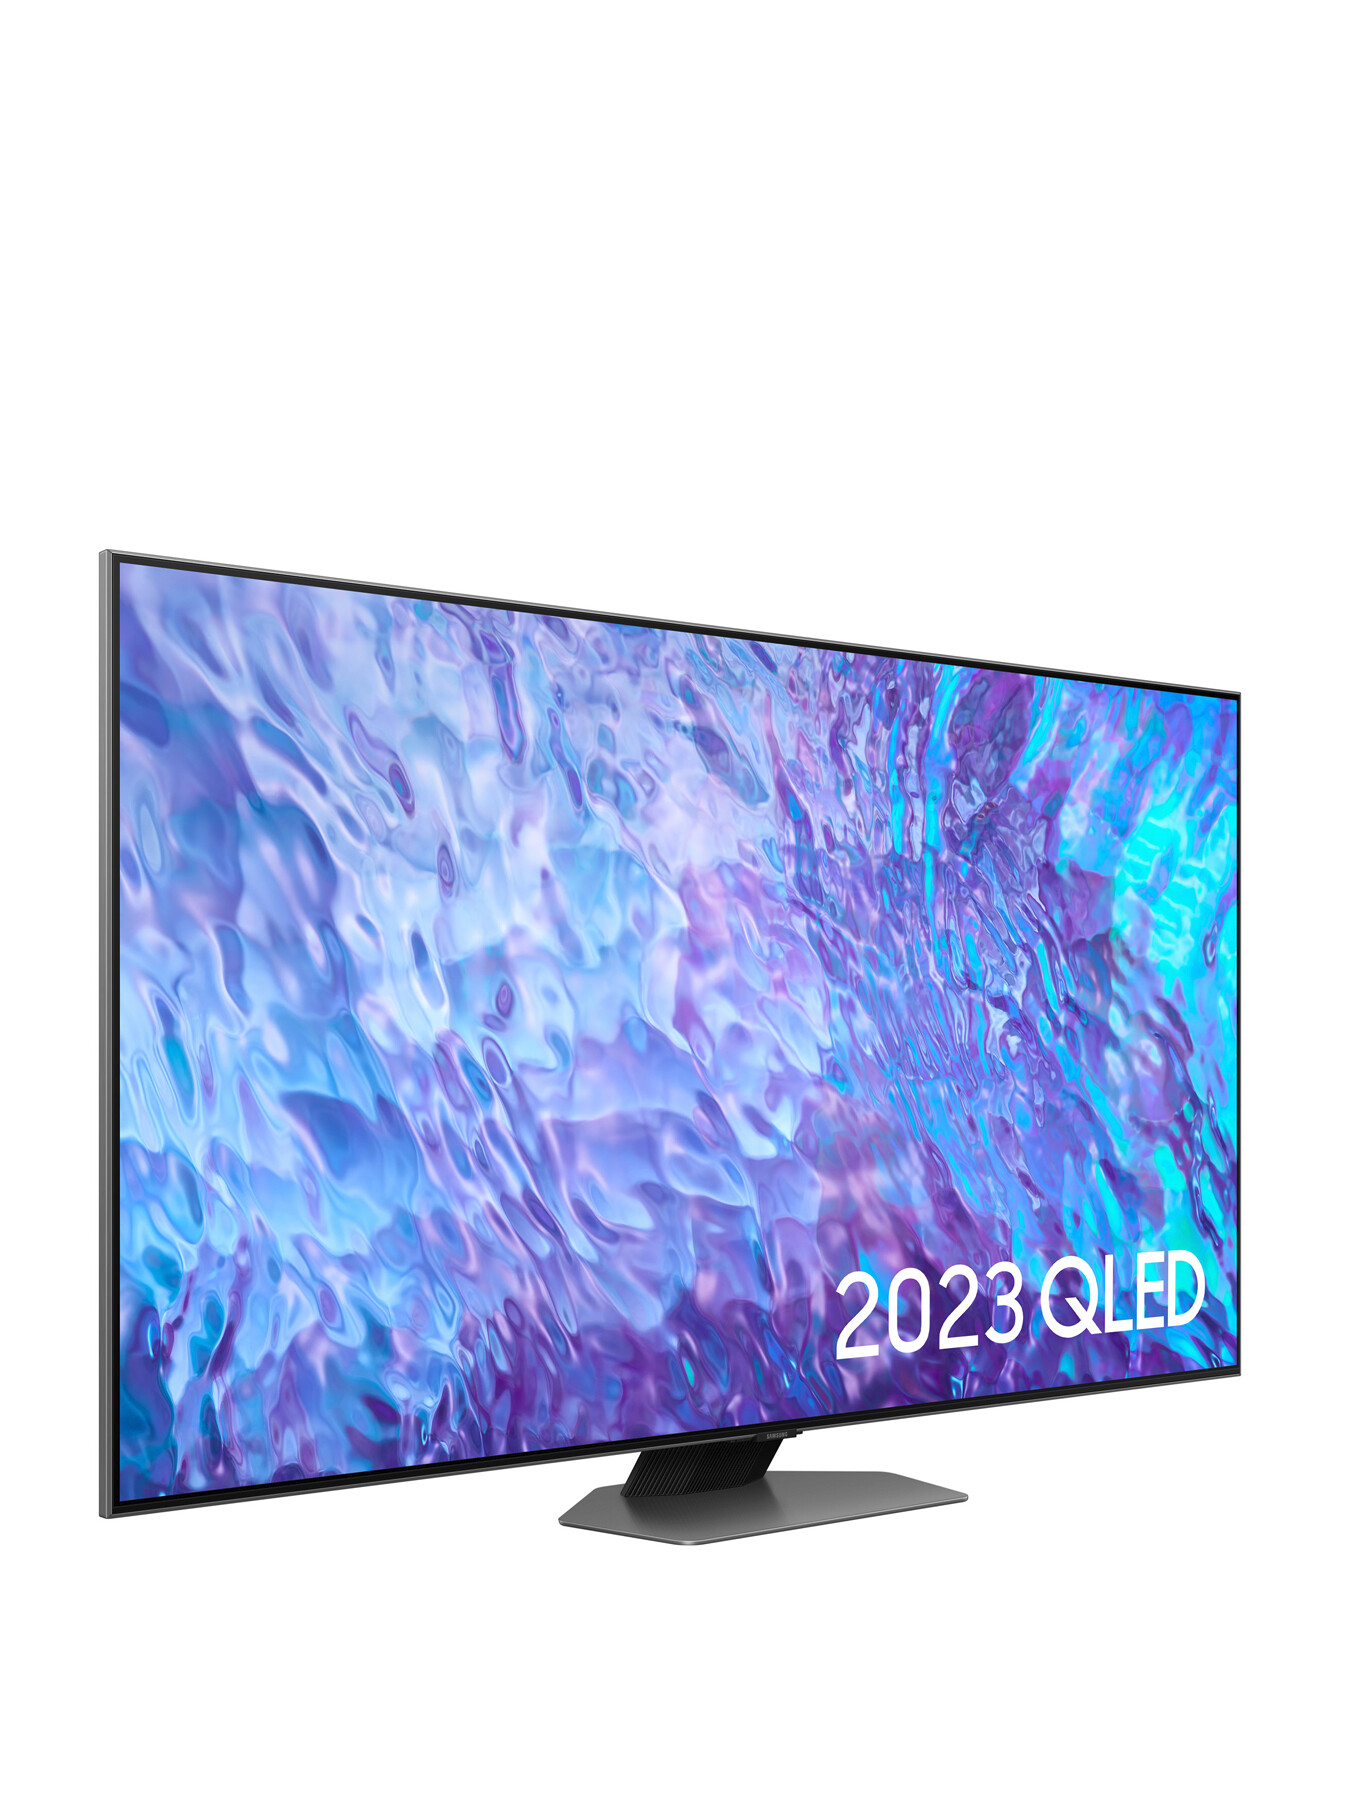 Samsung QE65Q80 QLED HDR Plus 4K Smart TV 65 Inch (2023) | Fenwick